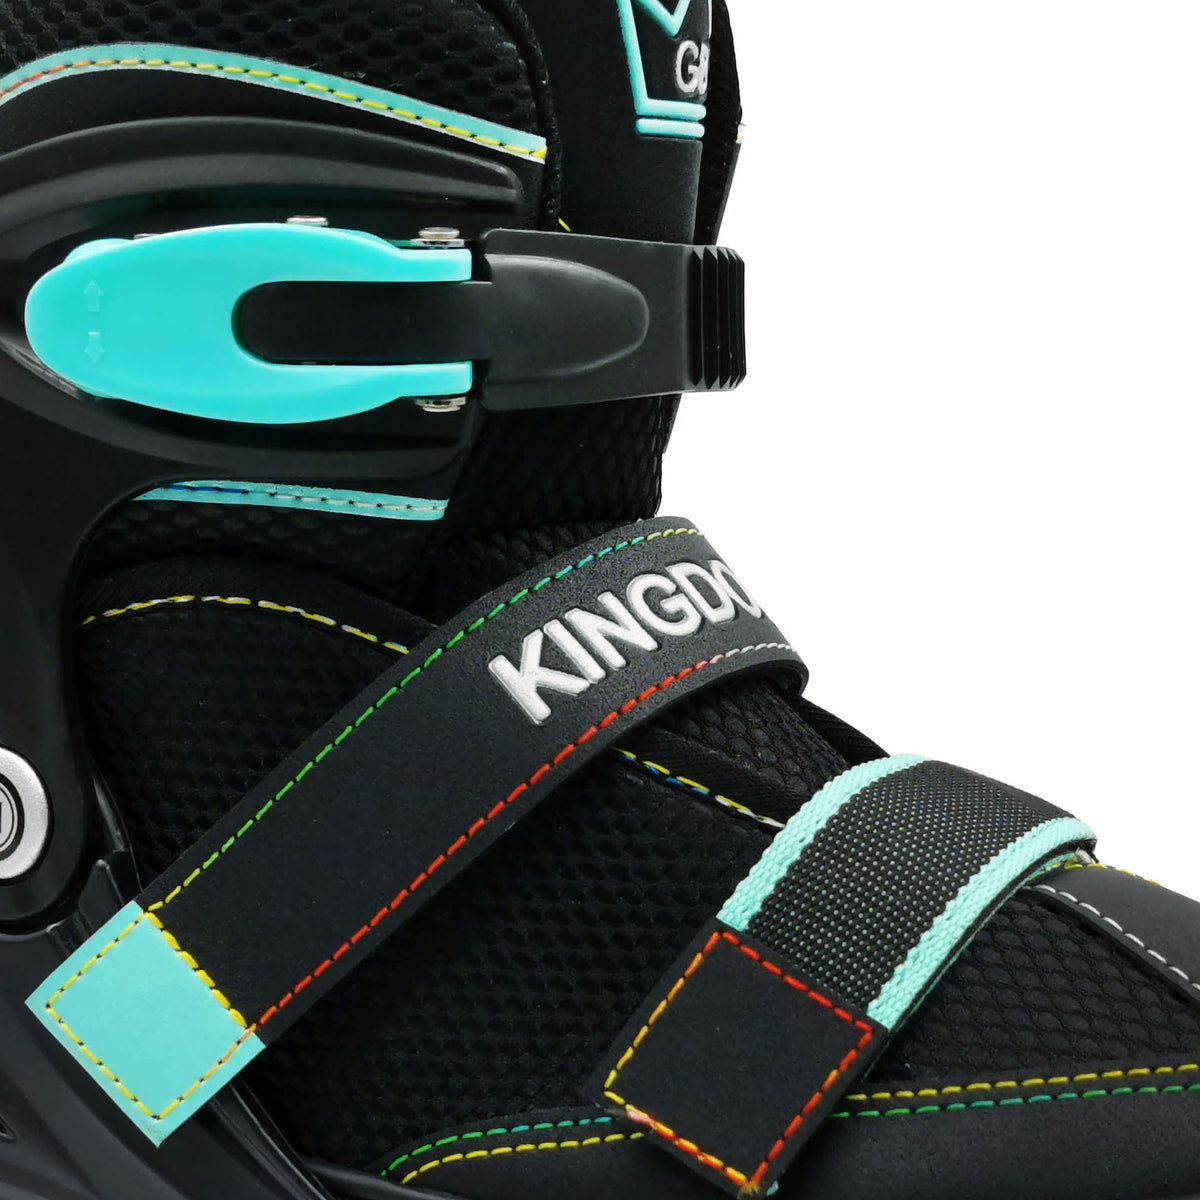 Kingdom GB Metro Flash Adjustable Inline Roller Skates Illuminating Light up Wheels Black Turquoise green